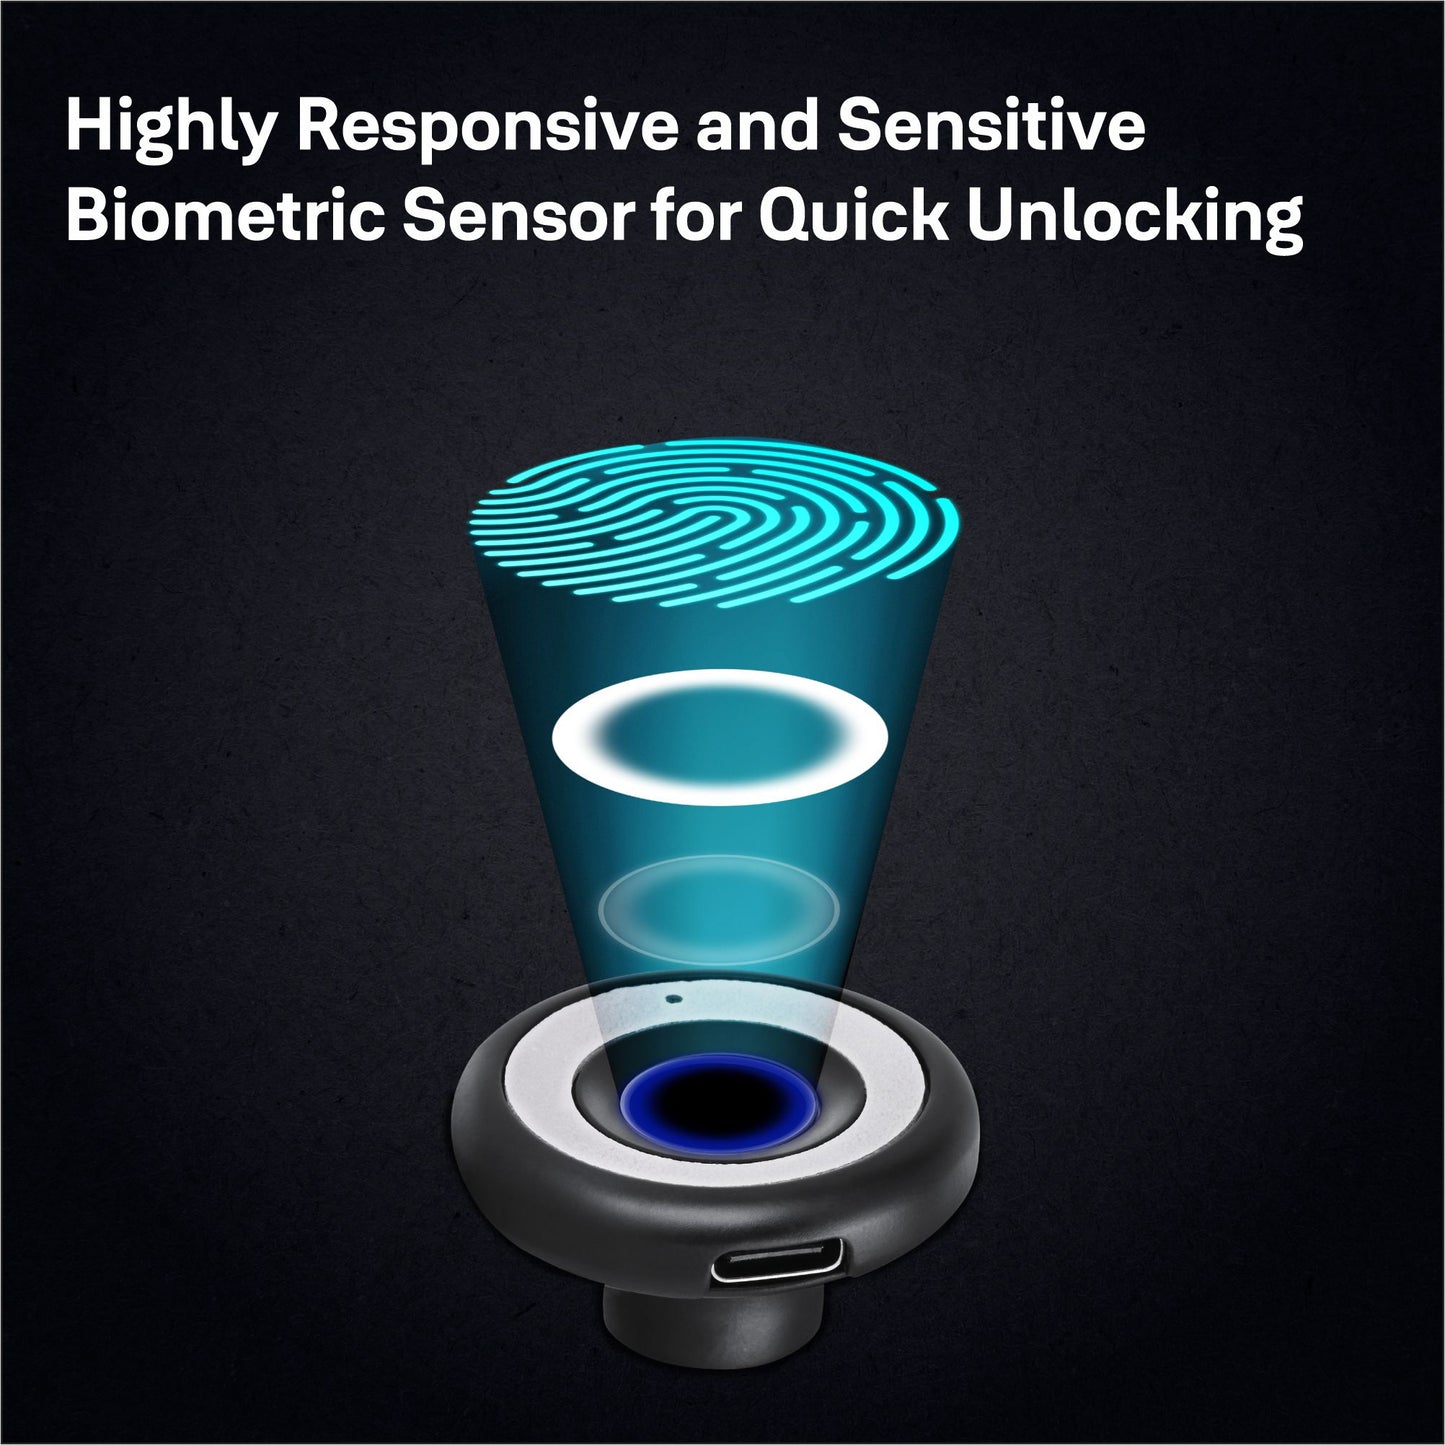 Biometric Smart Premium Furniture Lock - Ivory